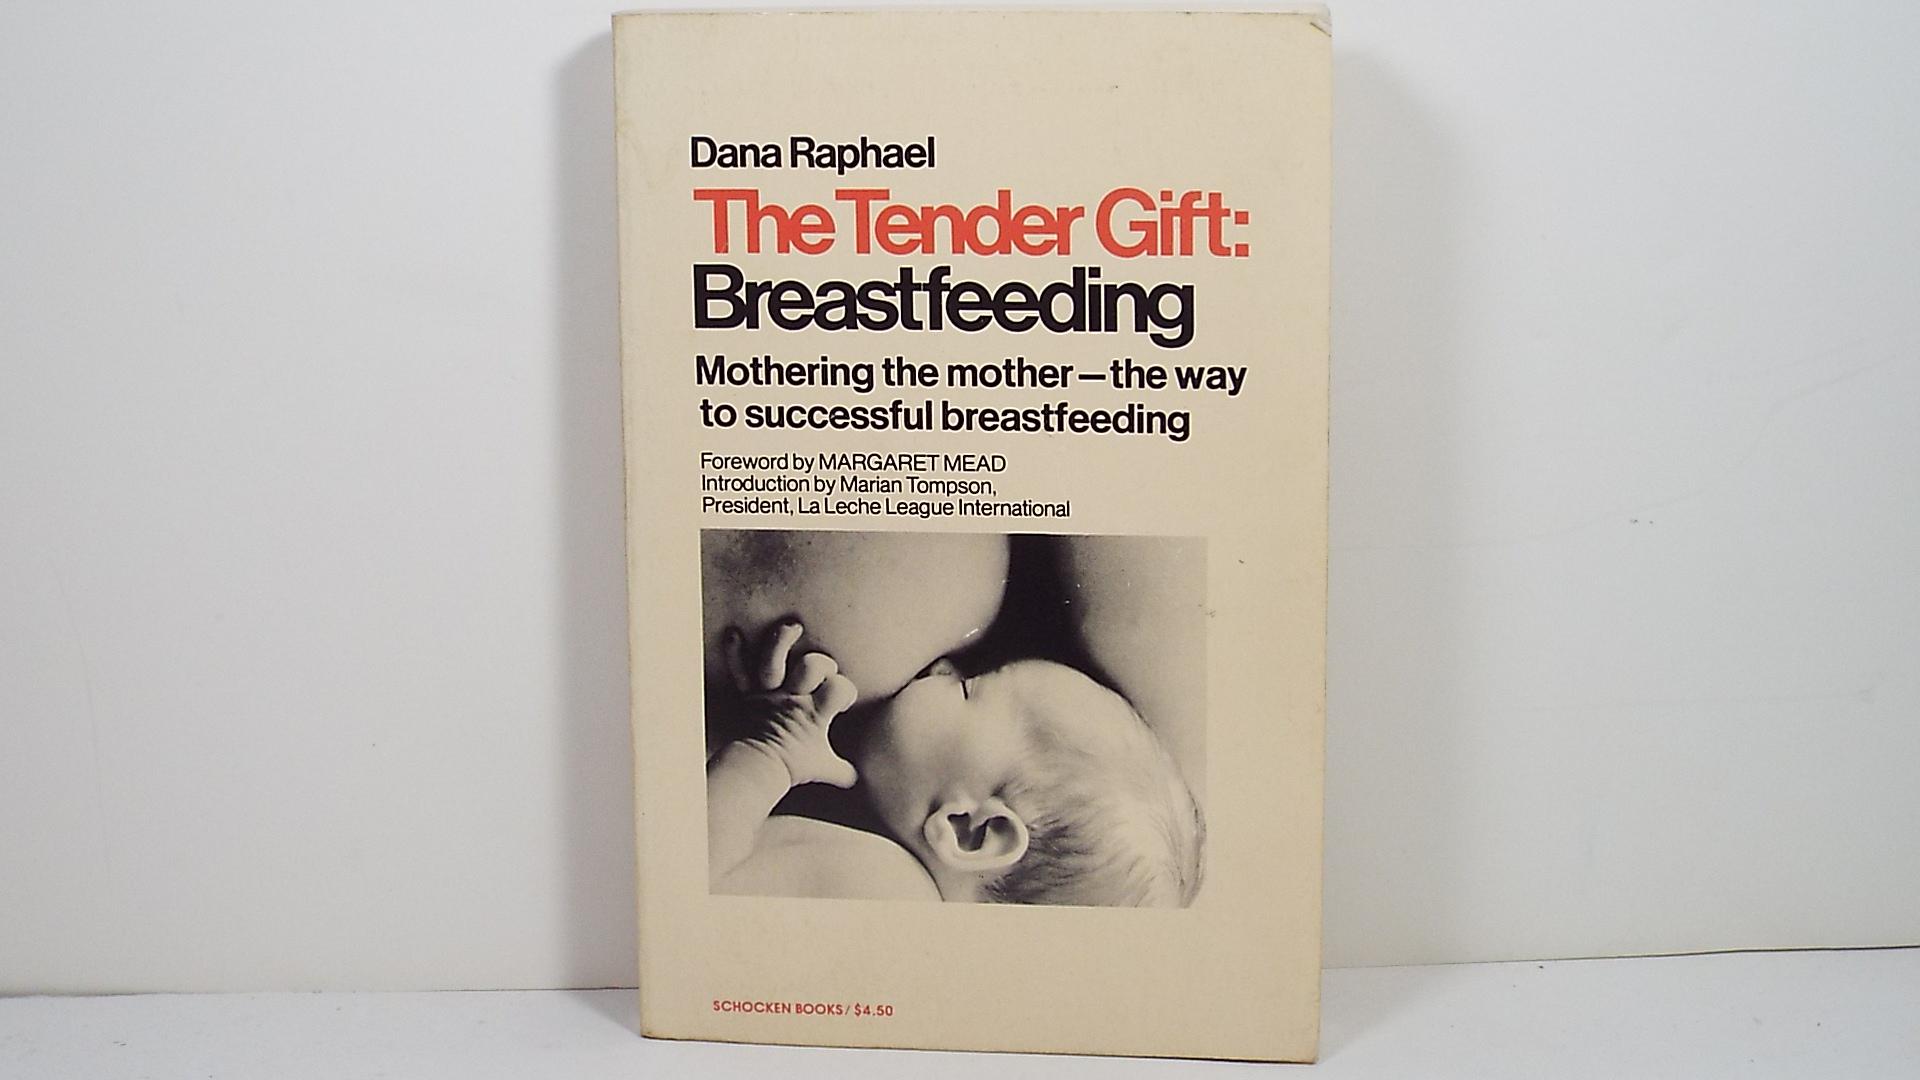 Book　Breastfeeding　Dana　Good　Trade　Very　The　(1955)　Gene　Raphael:　The　Paperback　by　Tender　Gift:　Peddler